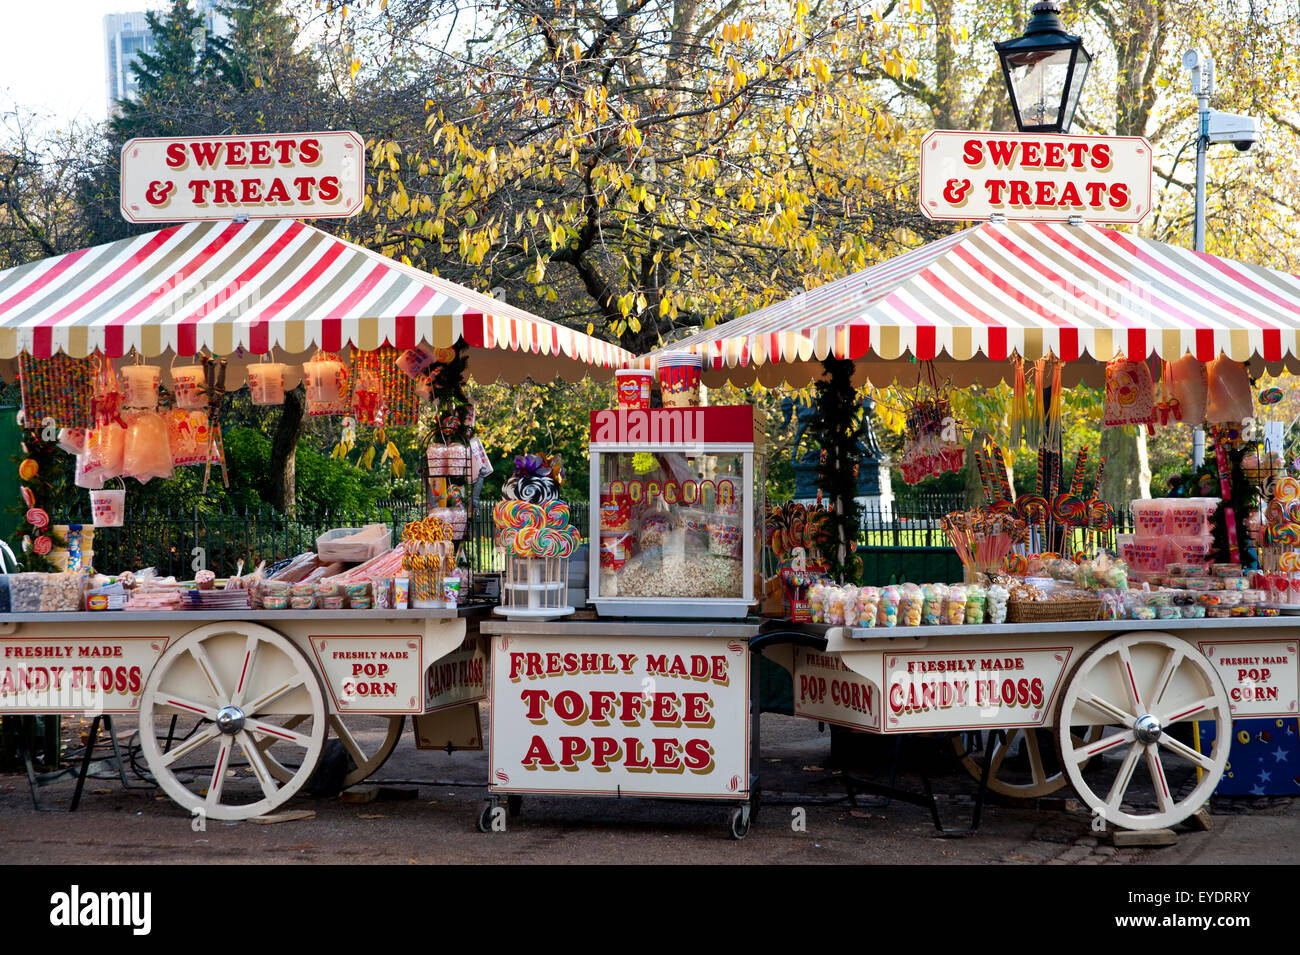 Candy Shop In Hyde Park, Winter Wonderland, London, Uk Stock Photo: 85741263 - Alamy